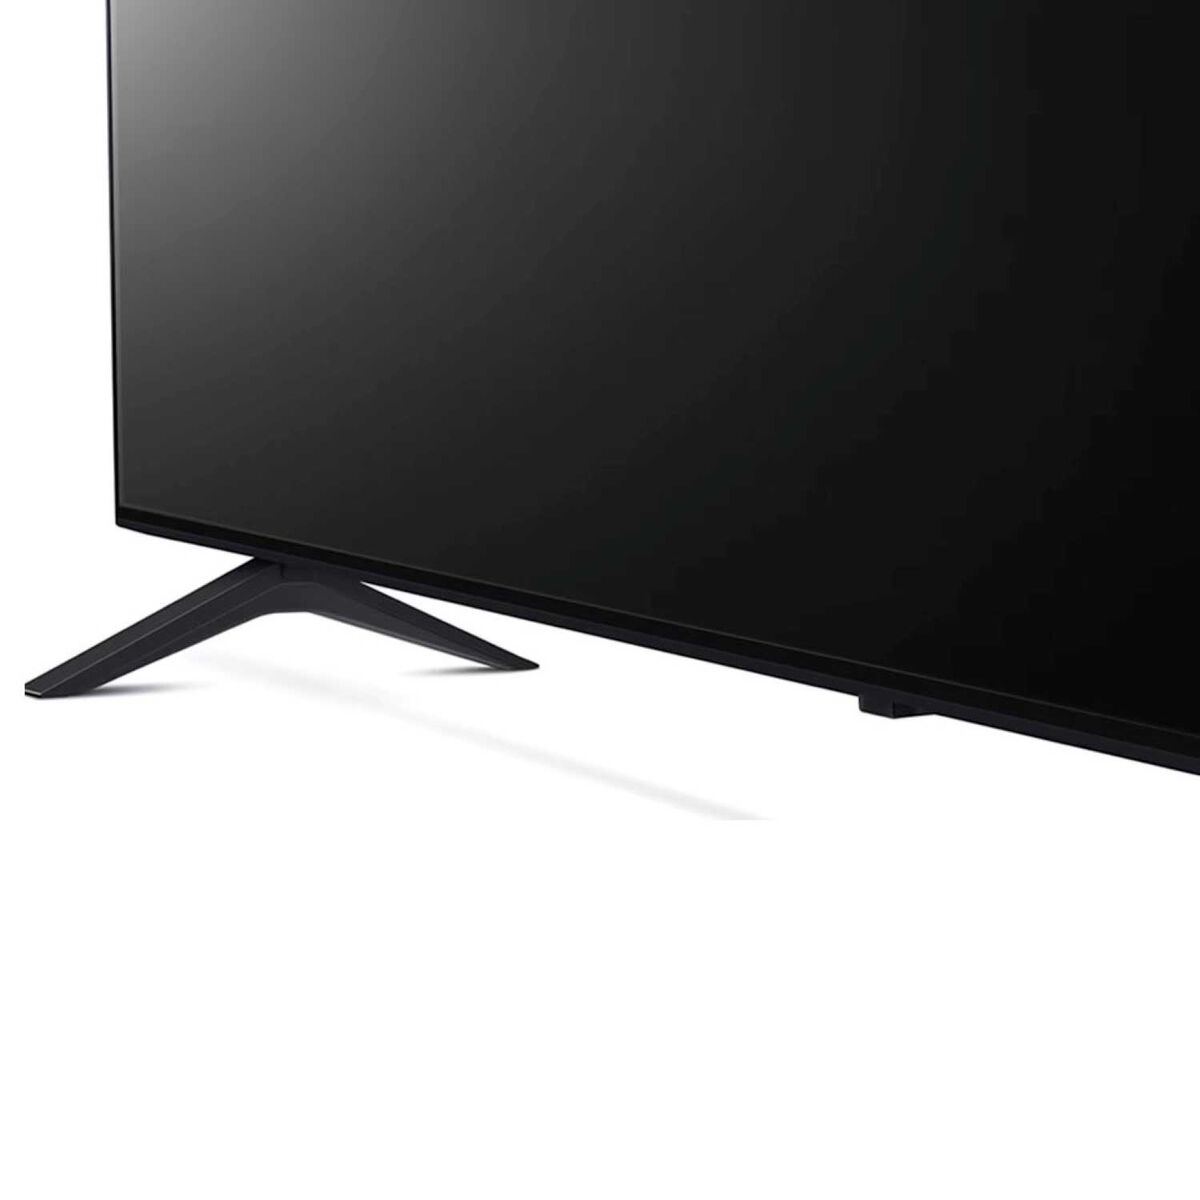 LED 50" LG NanoCell 50NANO77SRA Smart TV 4K UHD 2023